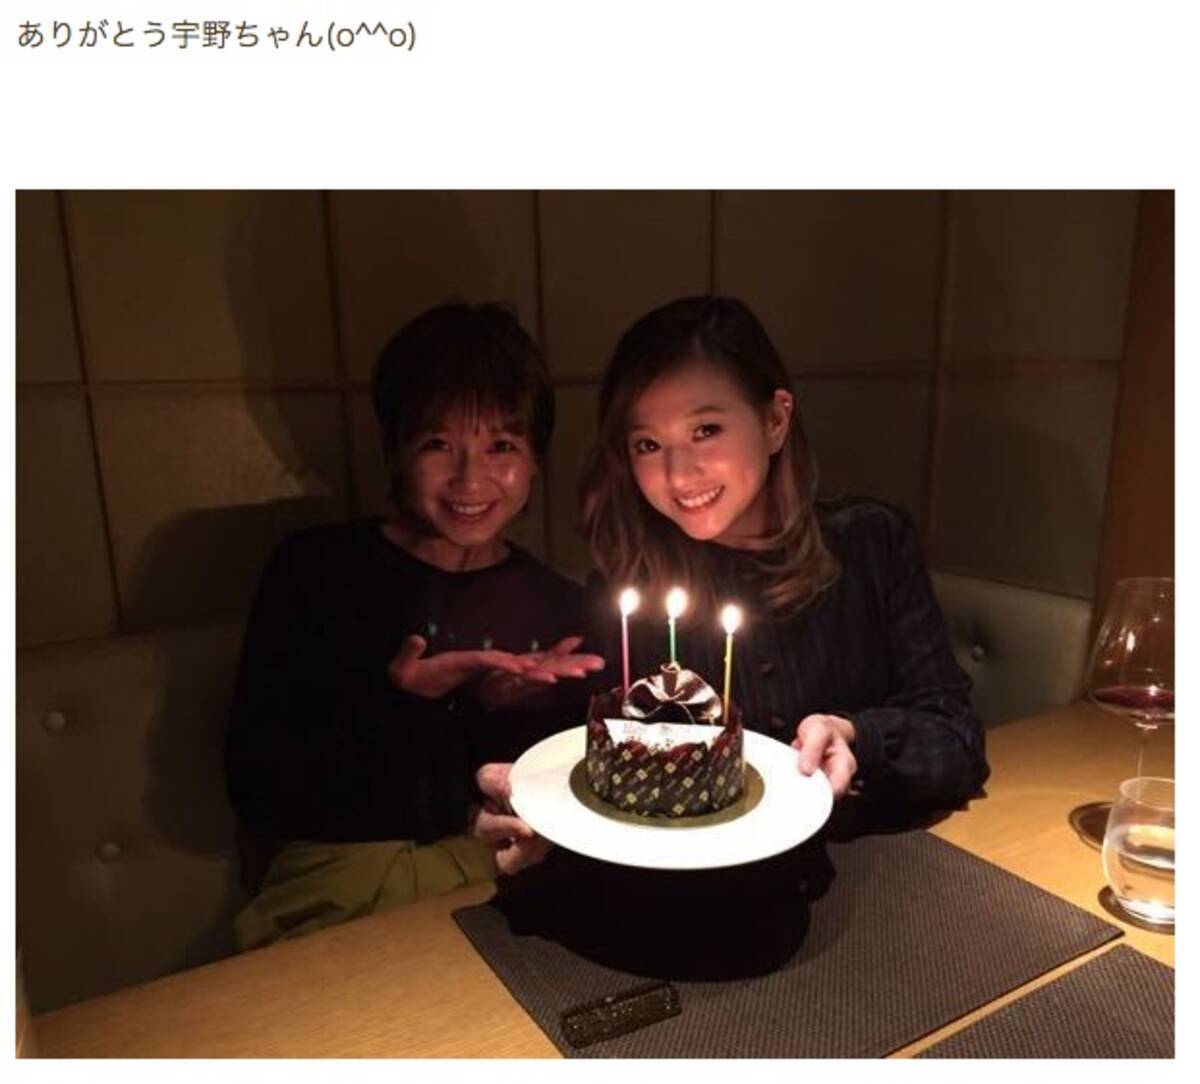 a 宇野実彩子 伊藤千晃が誕生日祝いで29年ものワインを二人で空ける 2ショット写真も公開 16年2月5日 エキサイトニュース